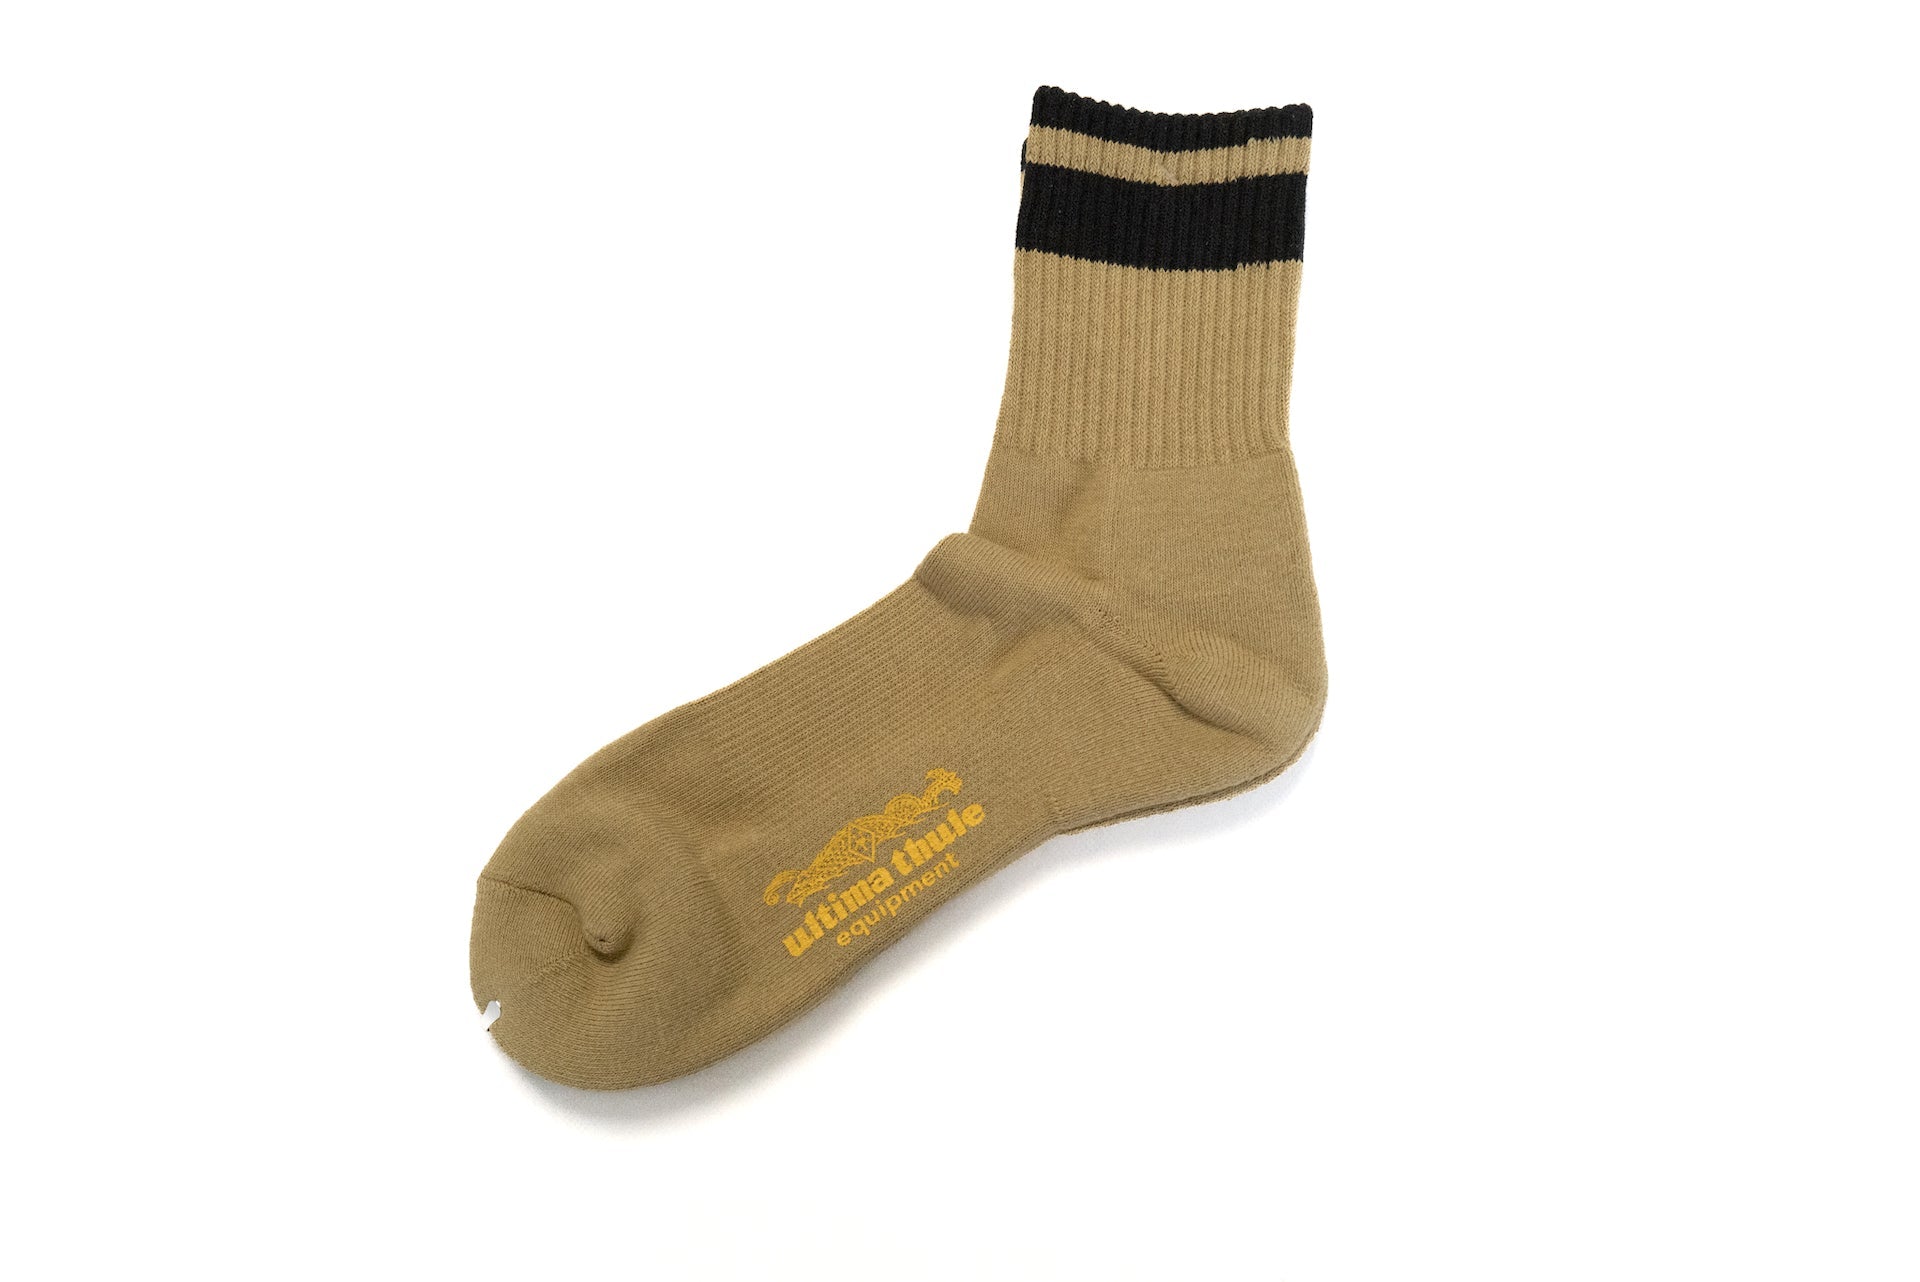 Freewheelers "Barlow" 6-inch Boot Socks